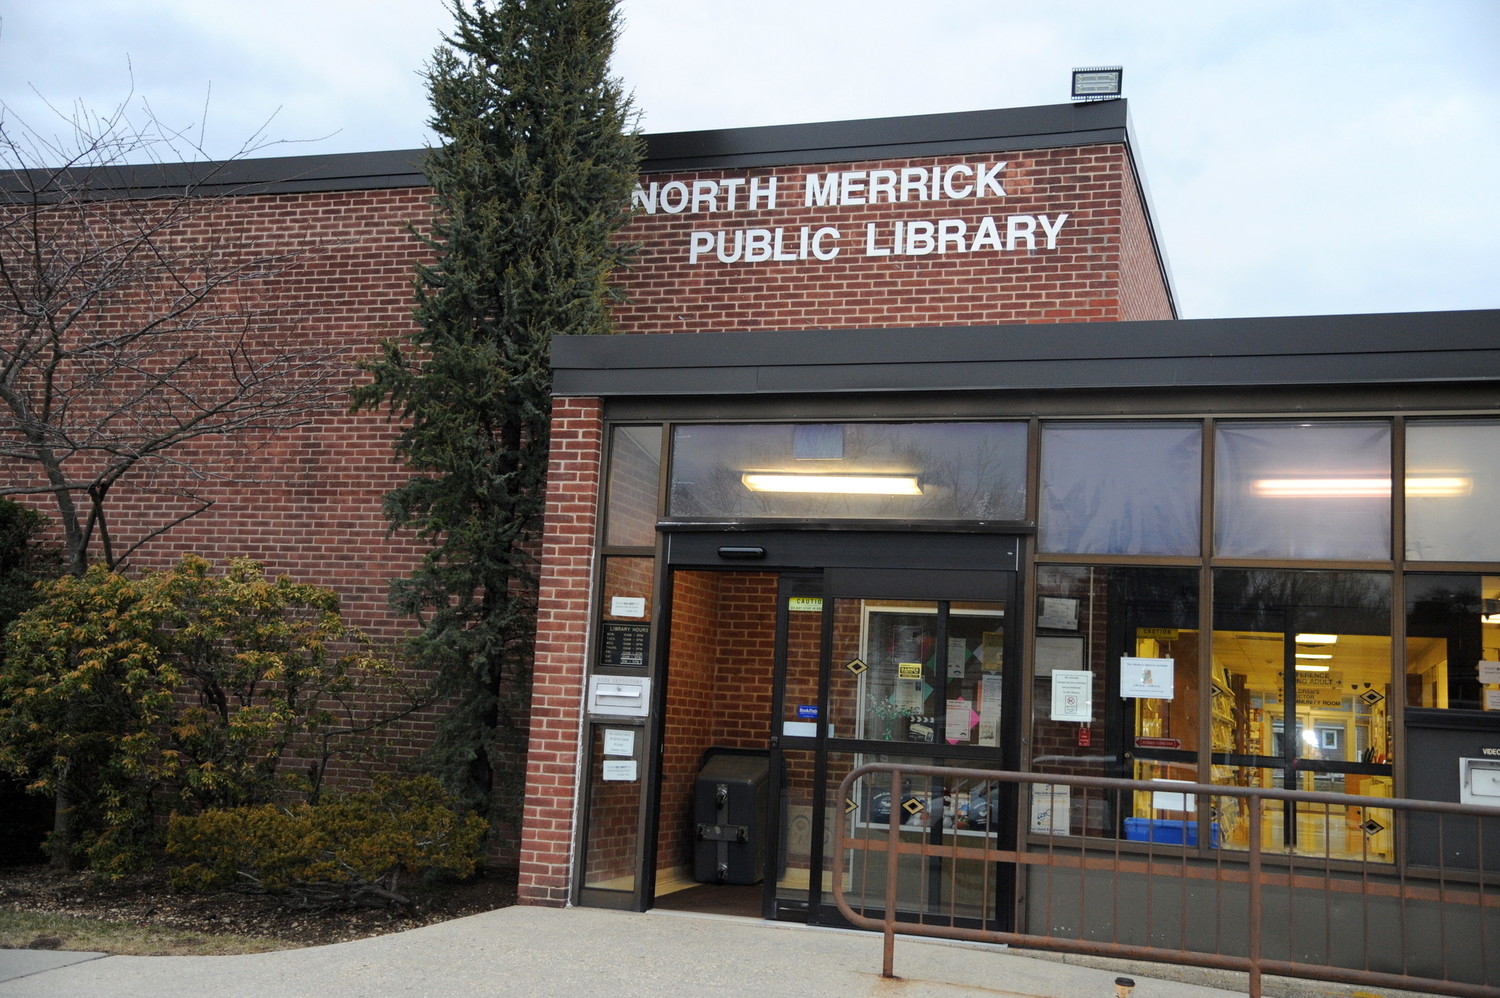 The North Merrick Public Library